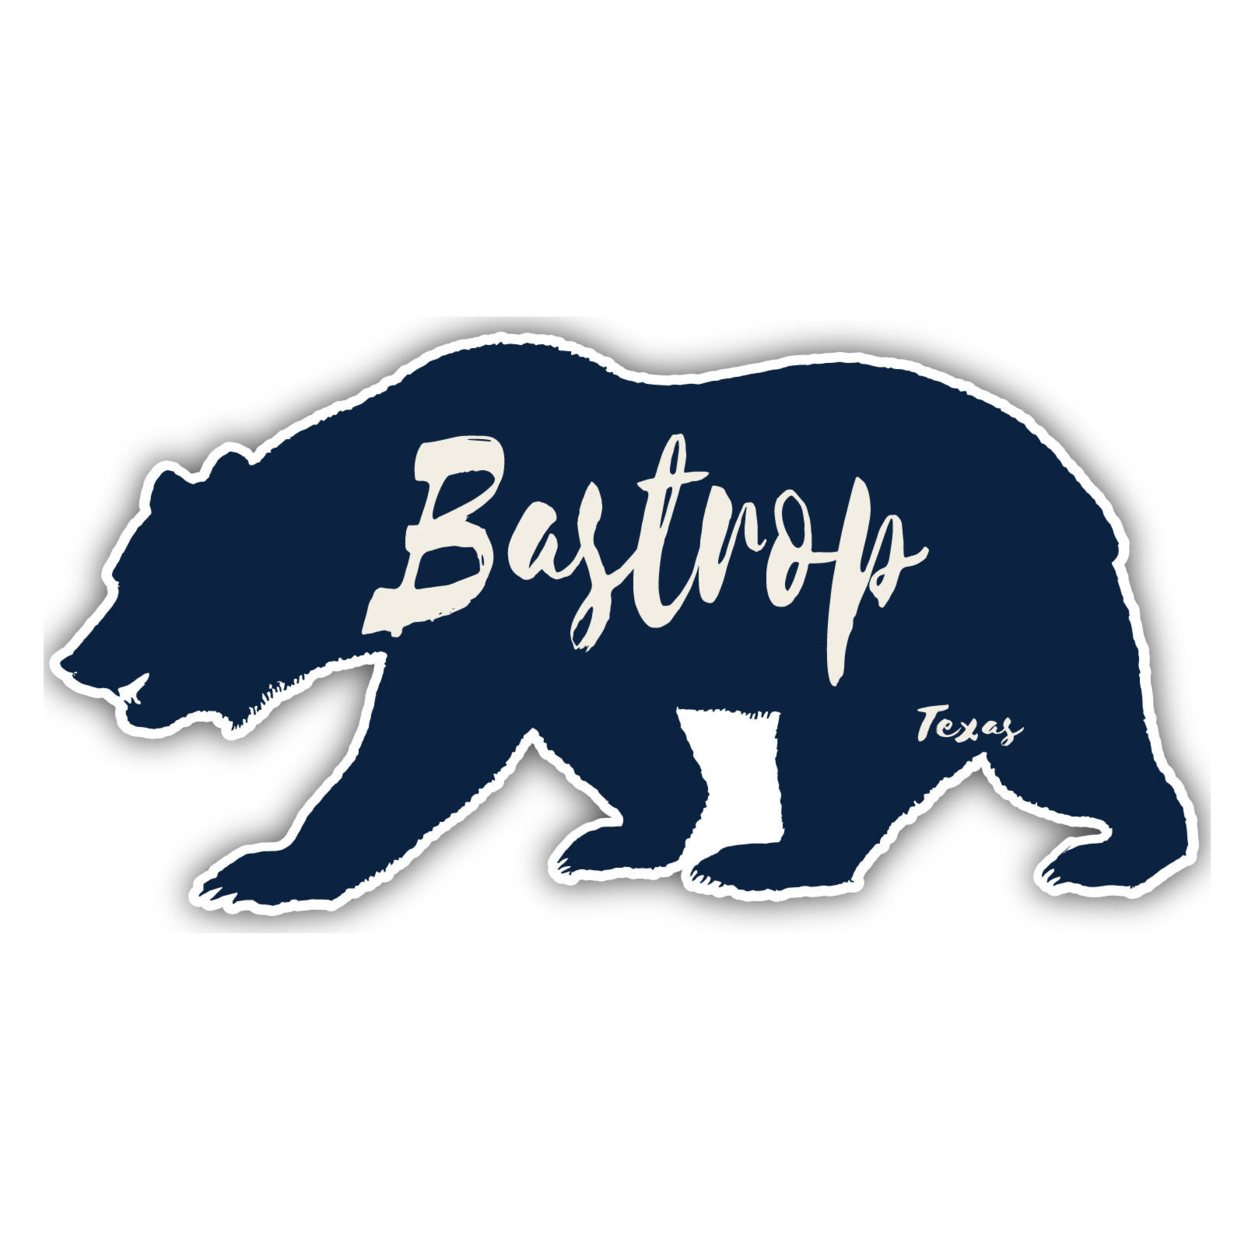 Bastrop Texas Souvenir Decorative Stickers (Choose Theme And Size) - Single Unit, 12-Inch, Bear